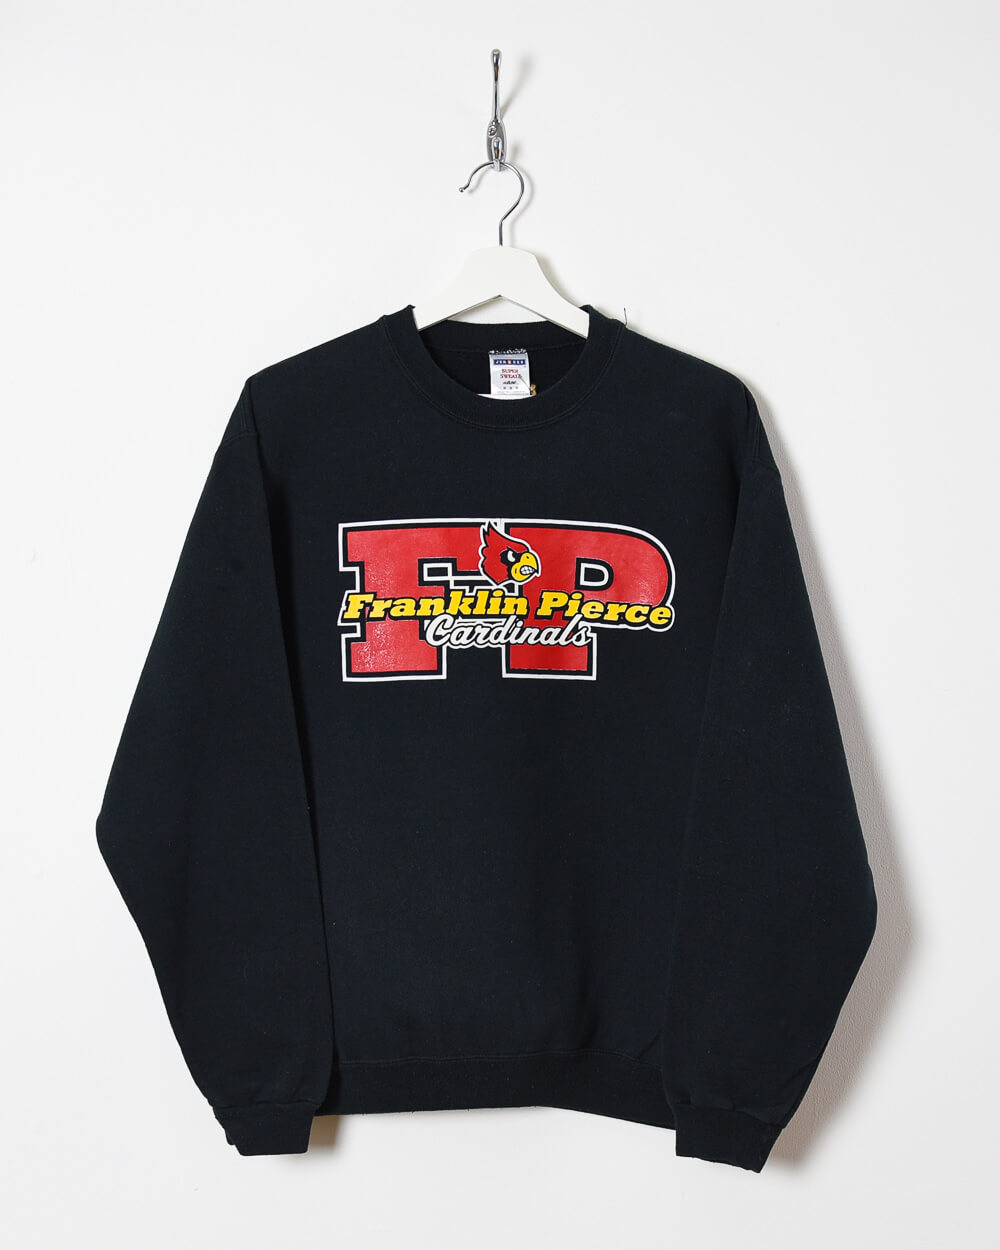 Franklin Pierce Cardinals Sweatshirt - Small - Domno Vintage 90s, 80s, 00s Retro and Vintage Clothing 